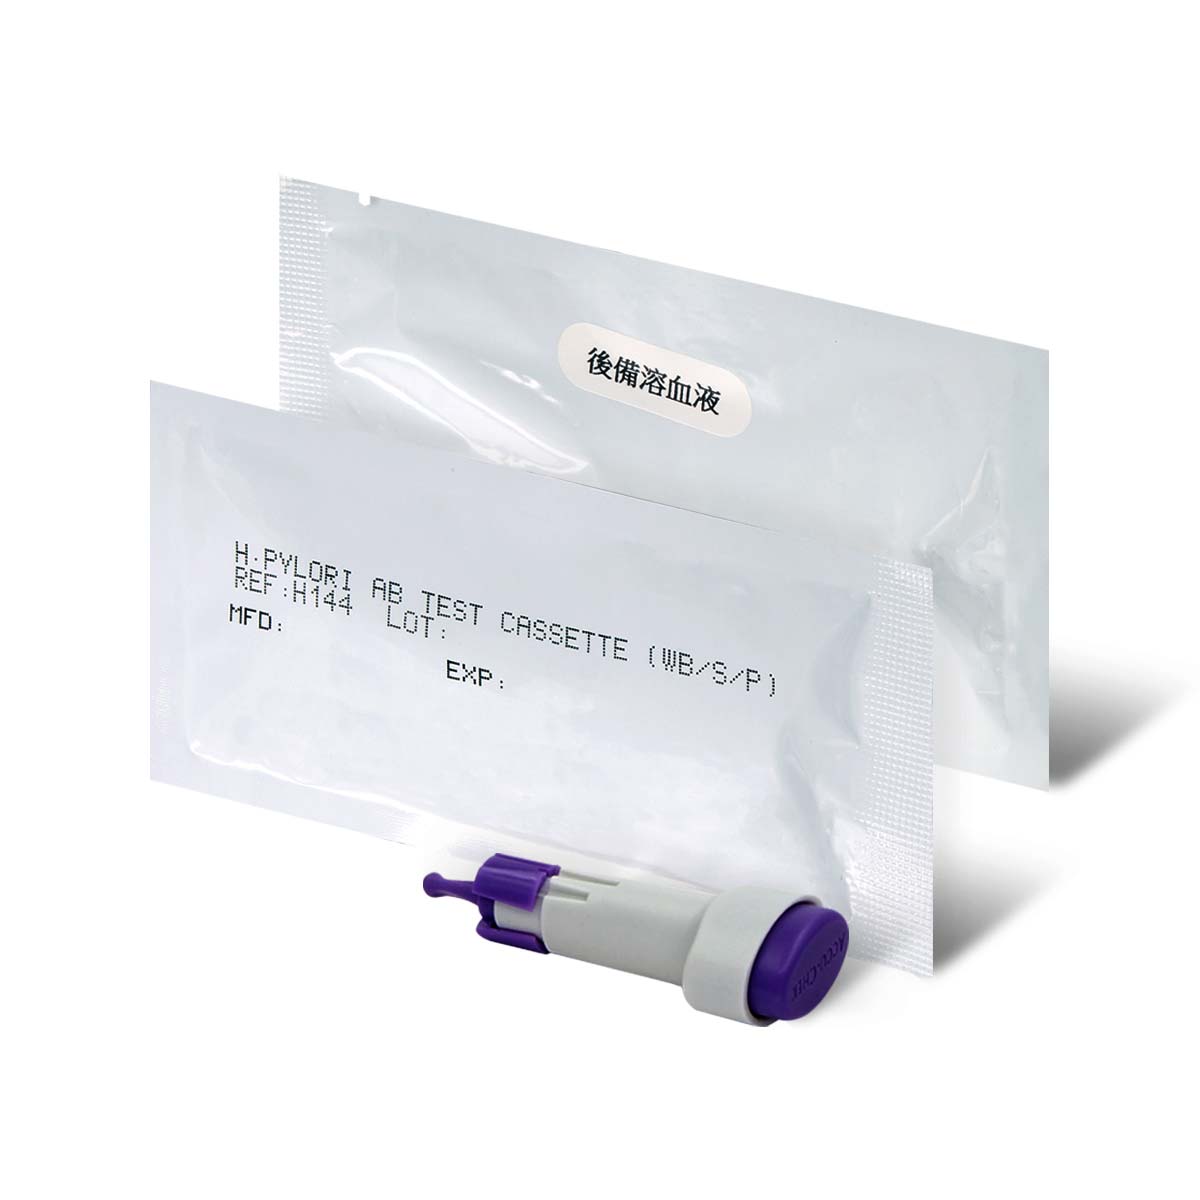 Intec helicobacter pylori rapid test kit-thumb_1